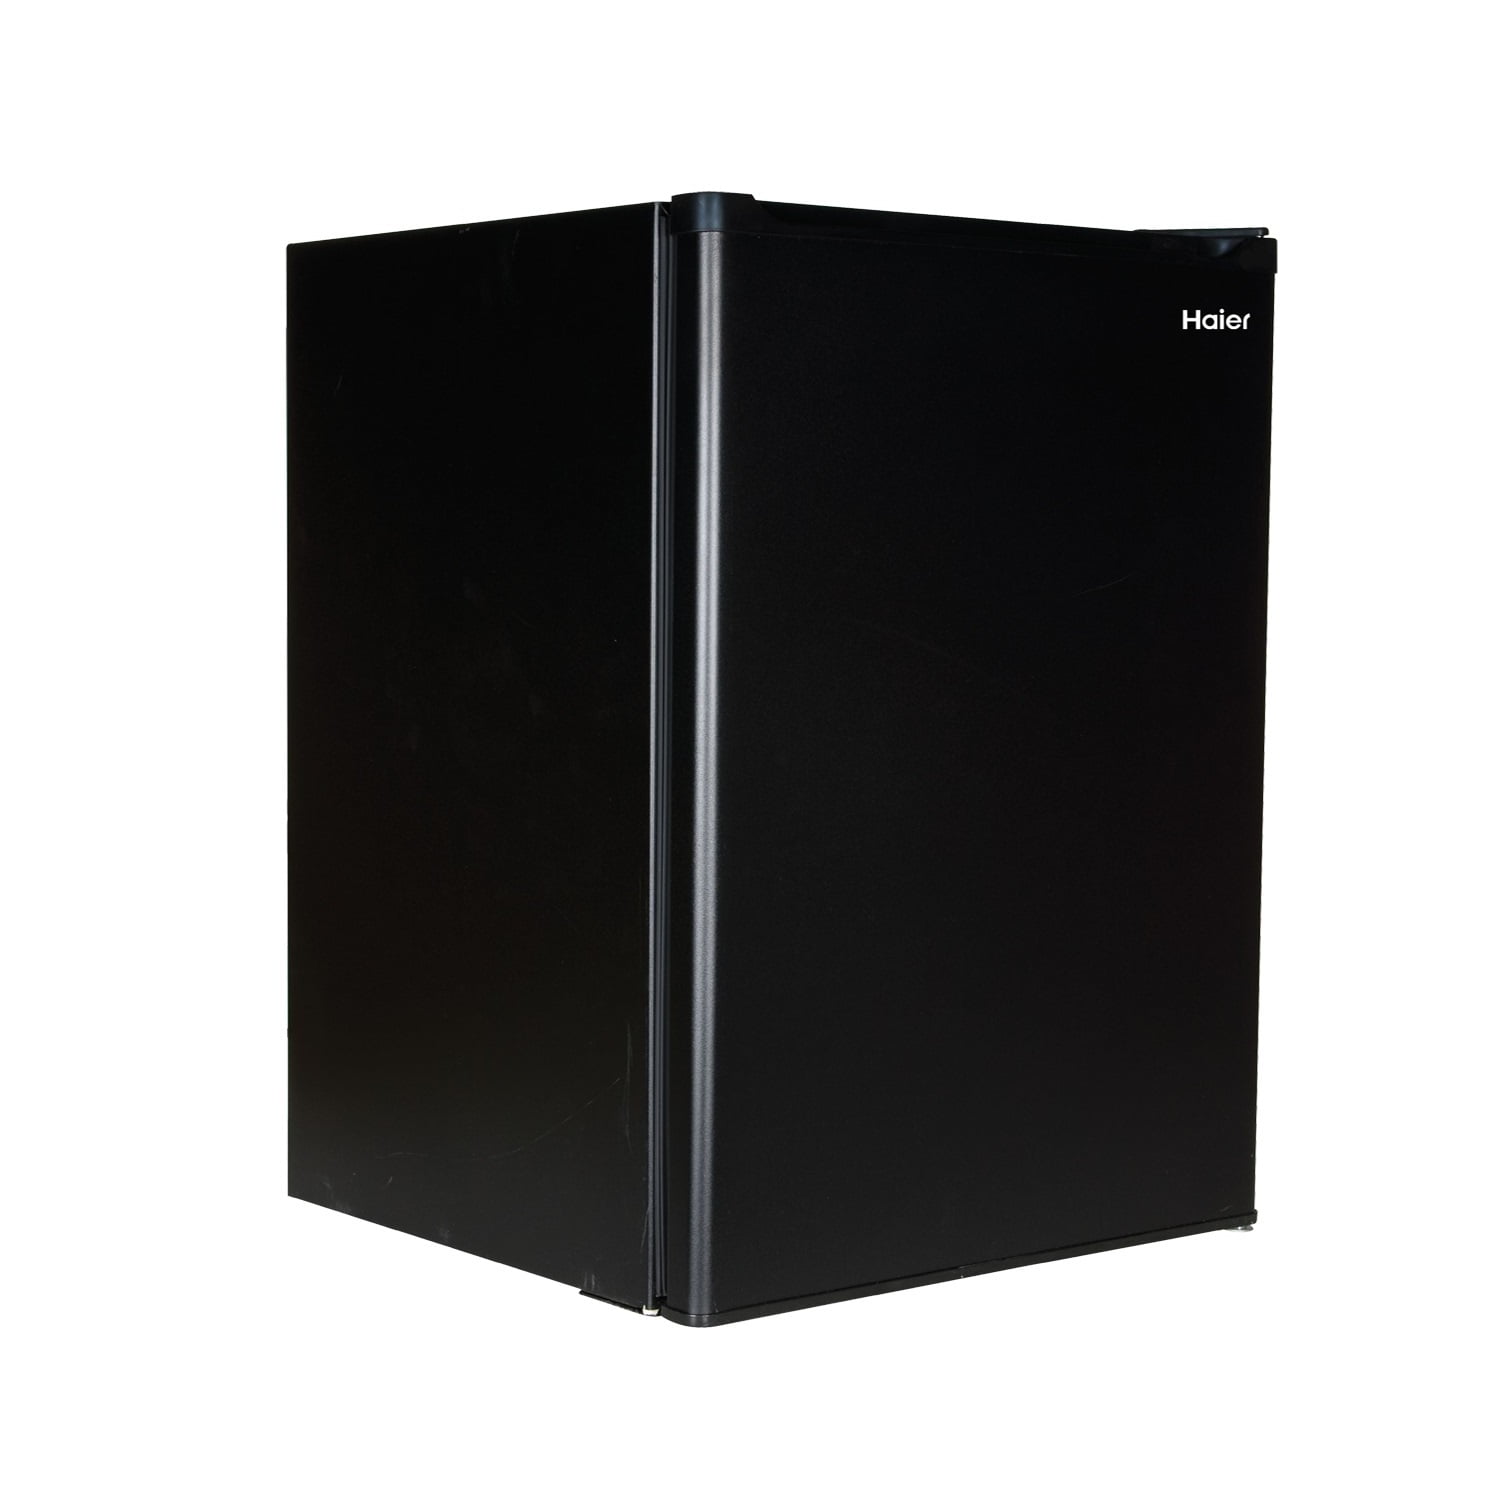 Haier 2.7 Cu Ft Single Door Compact Refrigerator HC27SW20RB, Black